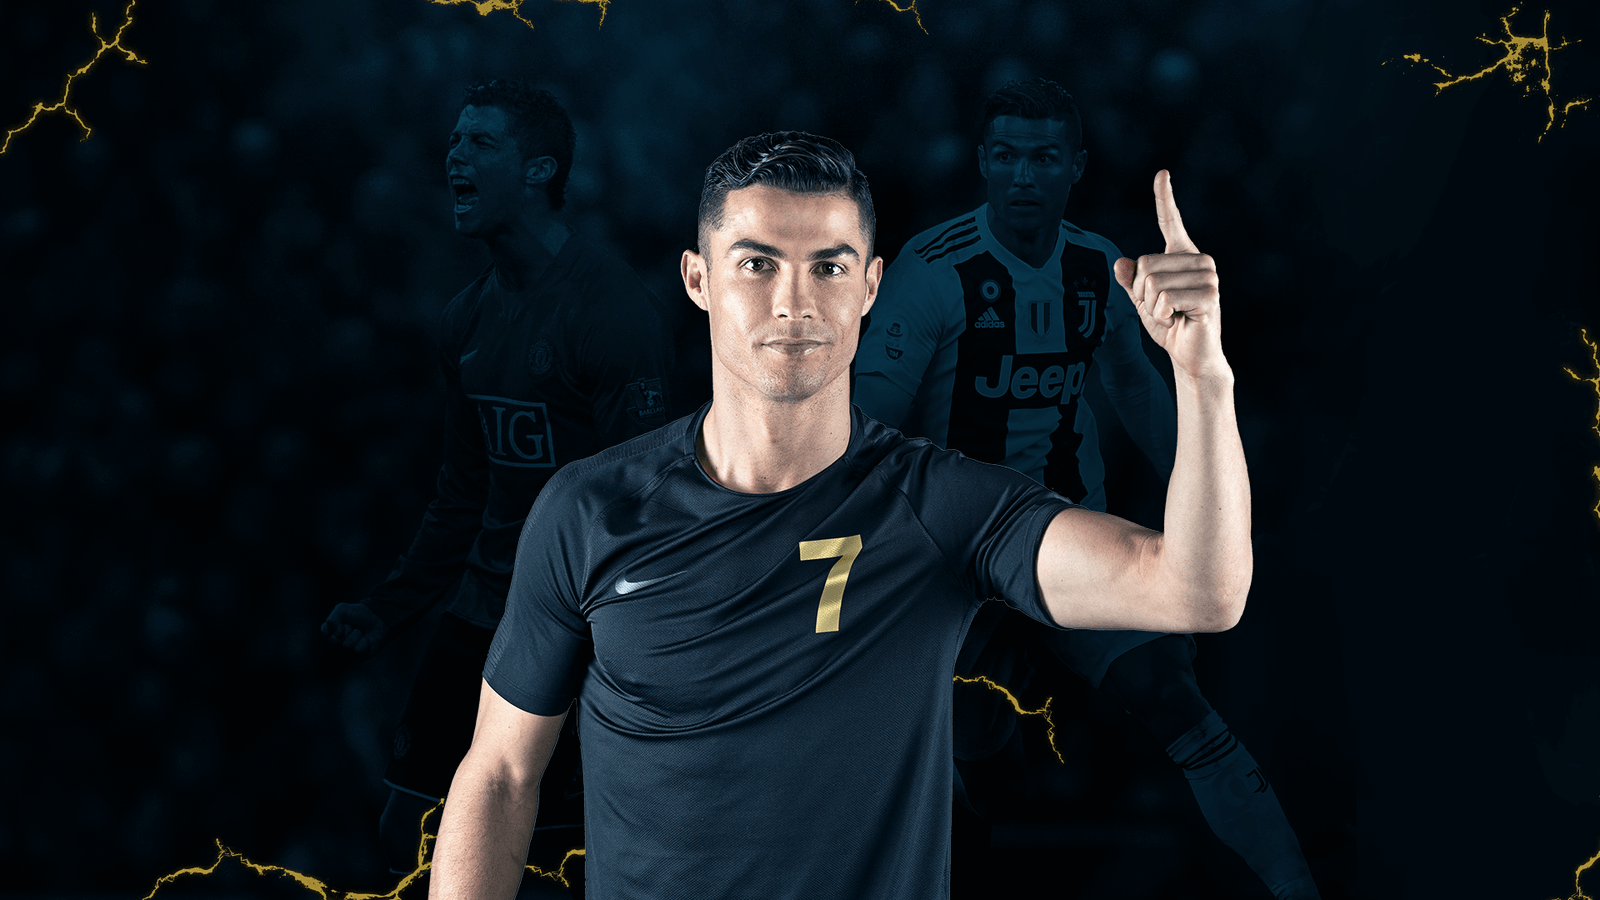 Cristiano Ronaldo: An Inspiration for Success